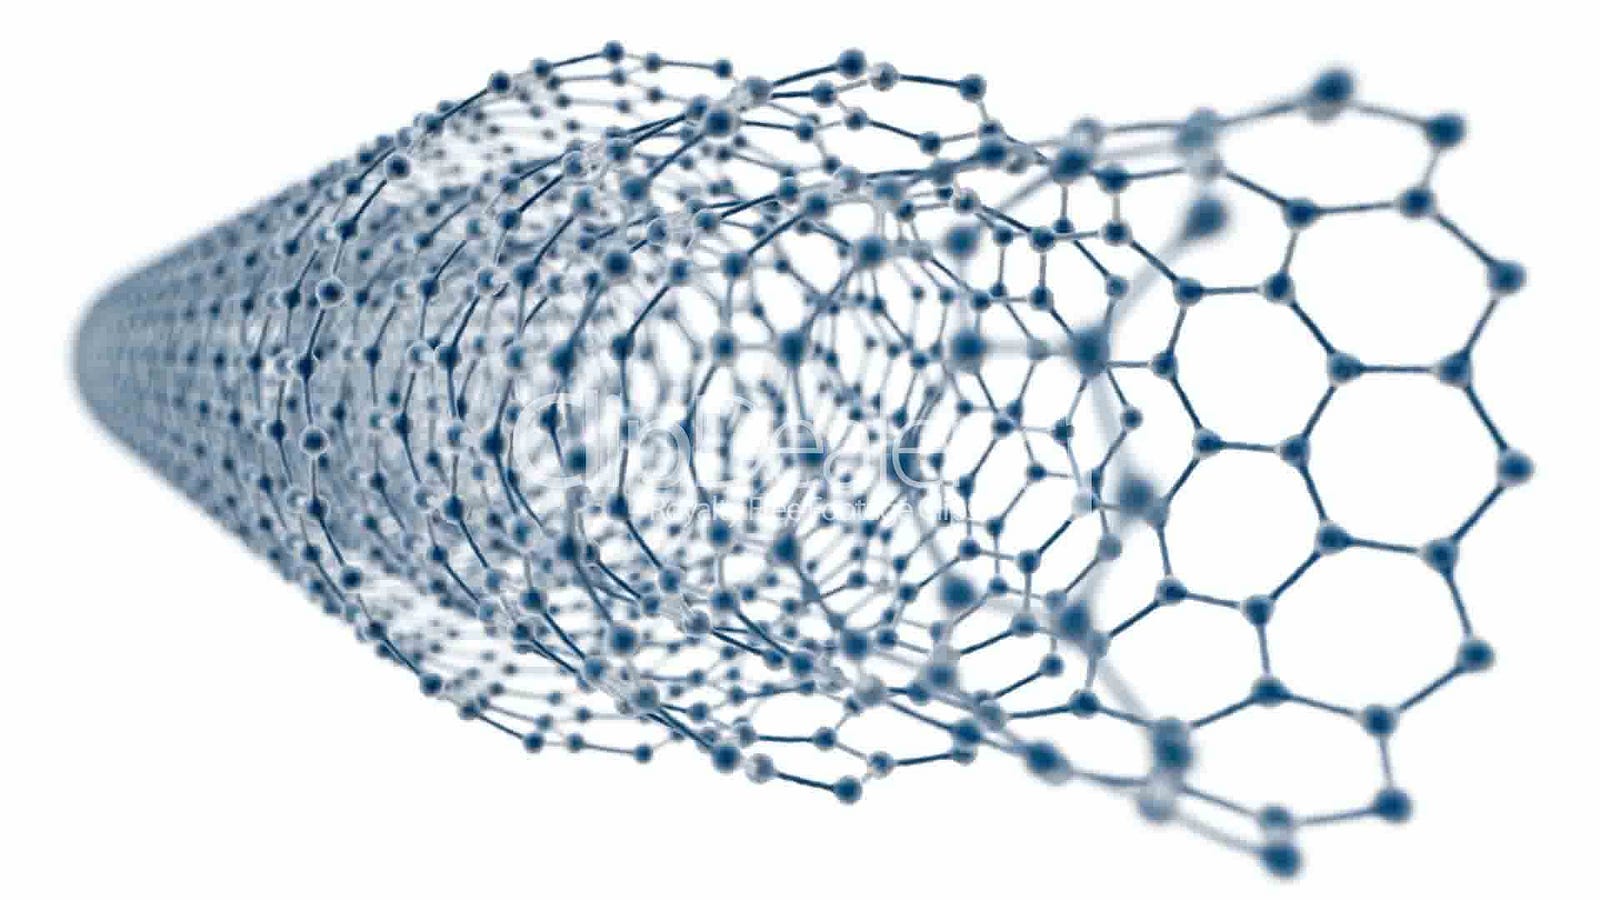 Multi Walled Carbon Nanotubes Online